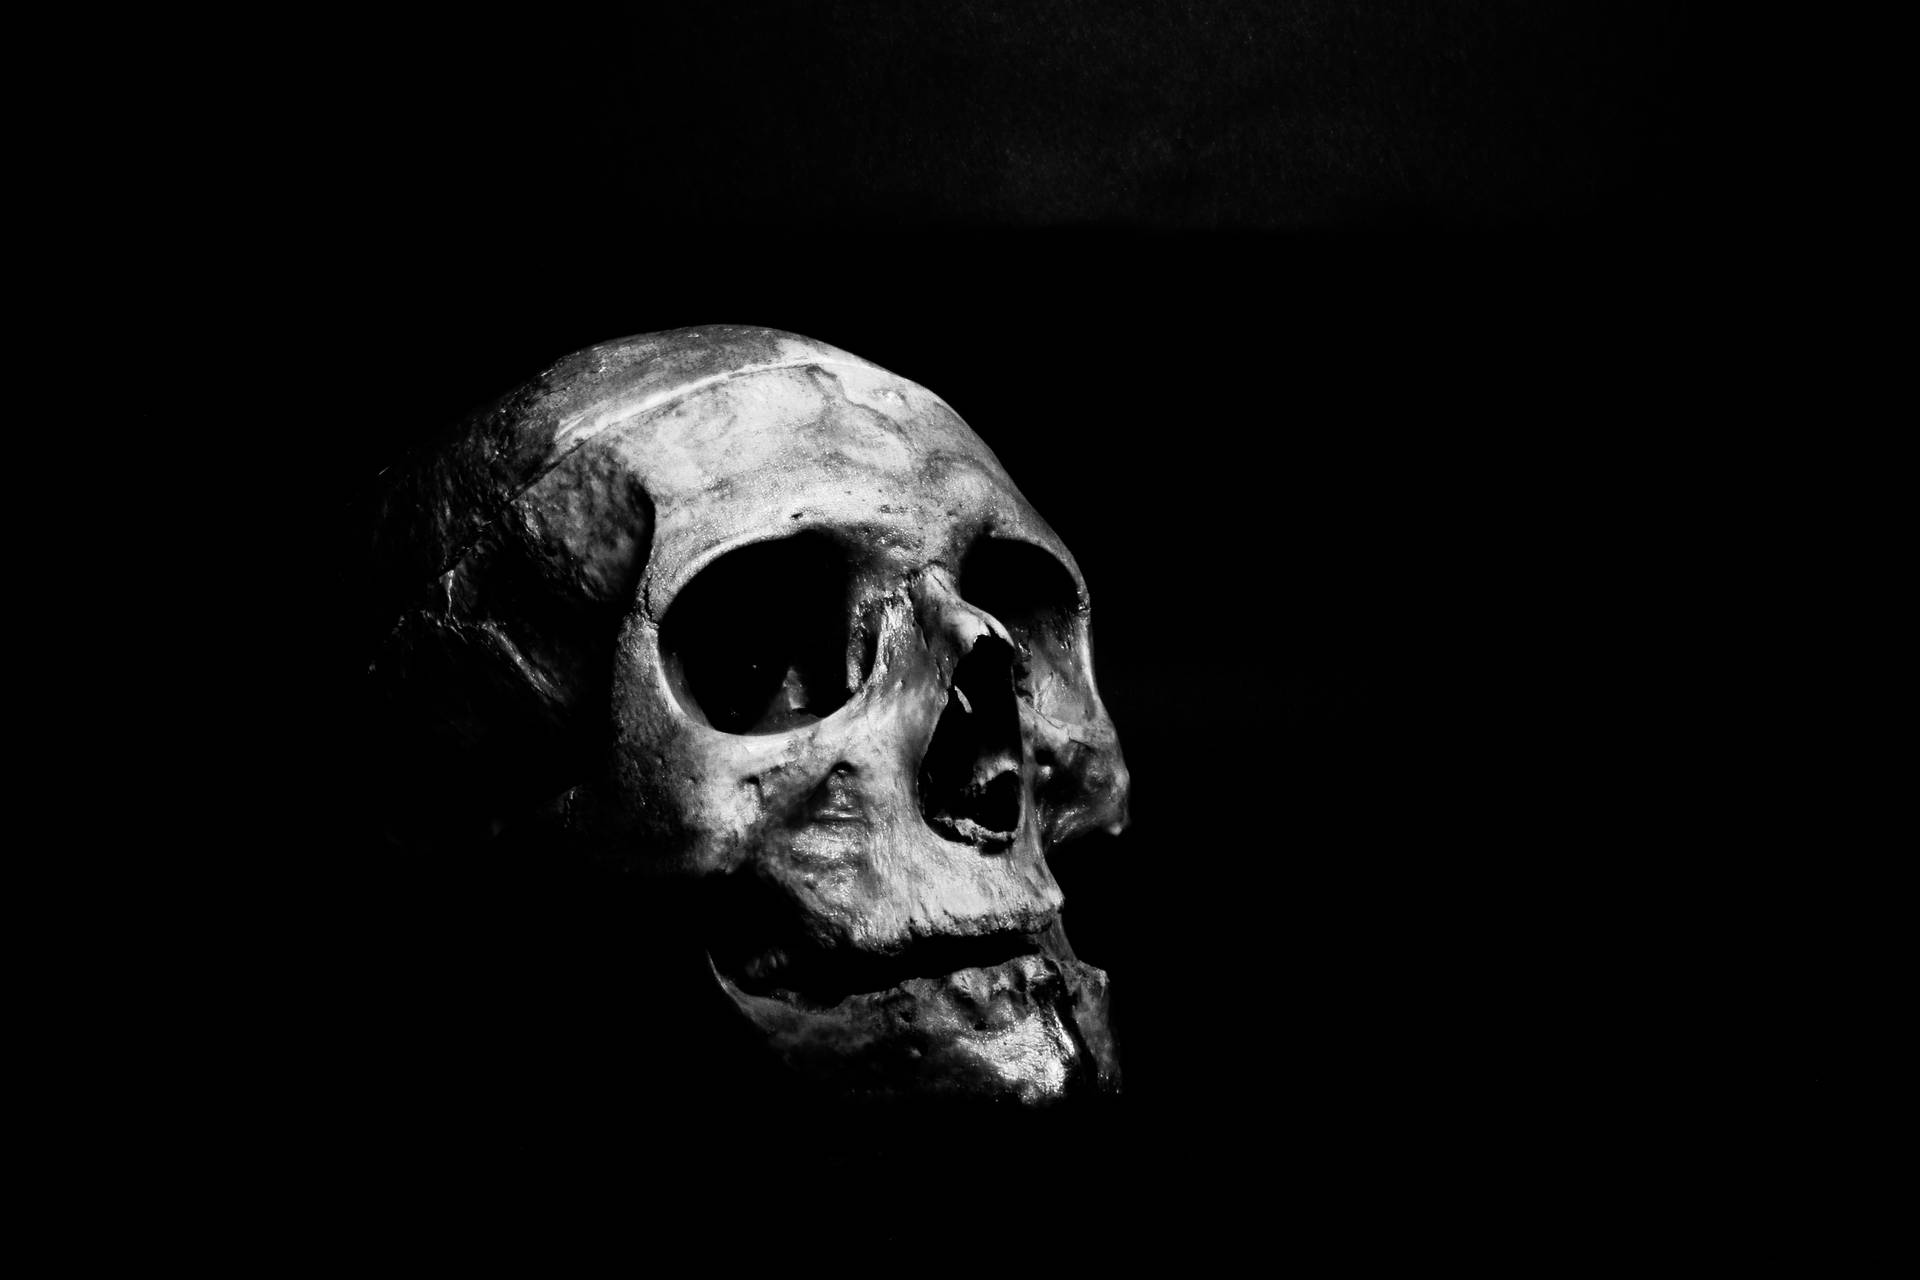 Embodying Melancholy: A Solemn Skull In Solitude